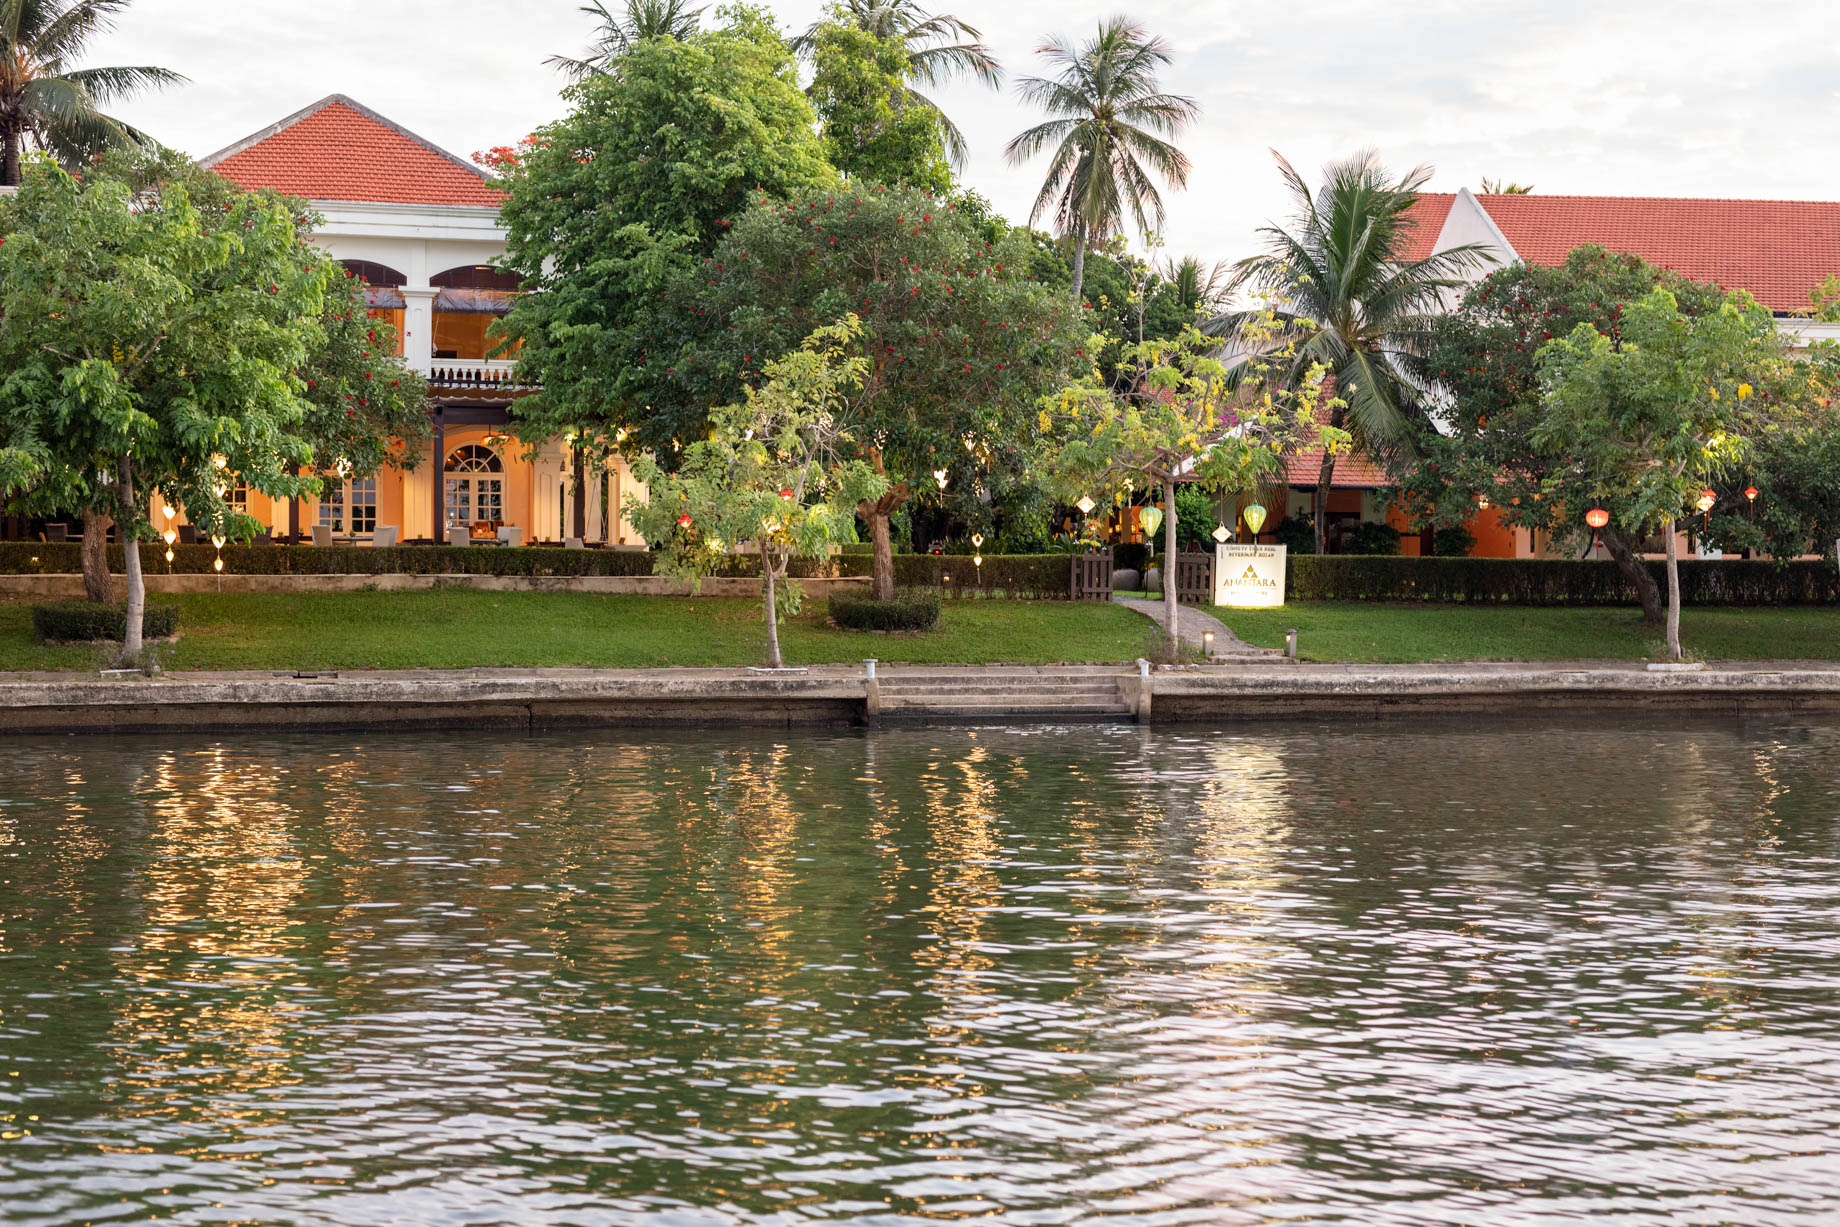 Anantara Hoi An Resort - Hoi An City, Vietnam - Resort River Front